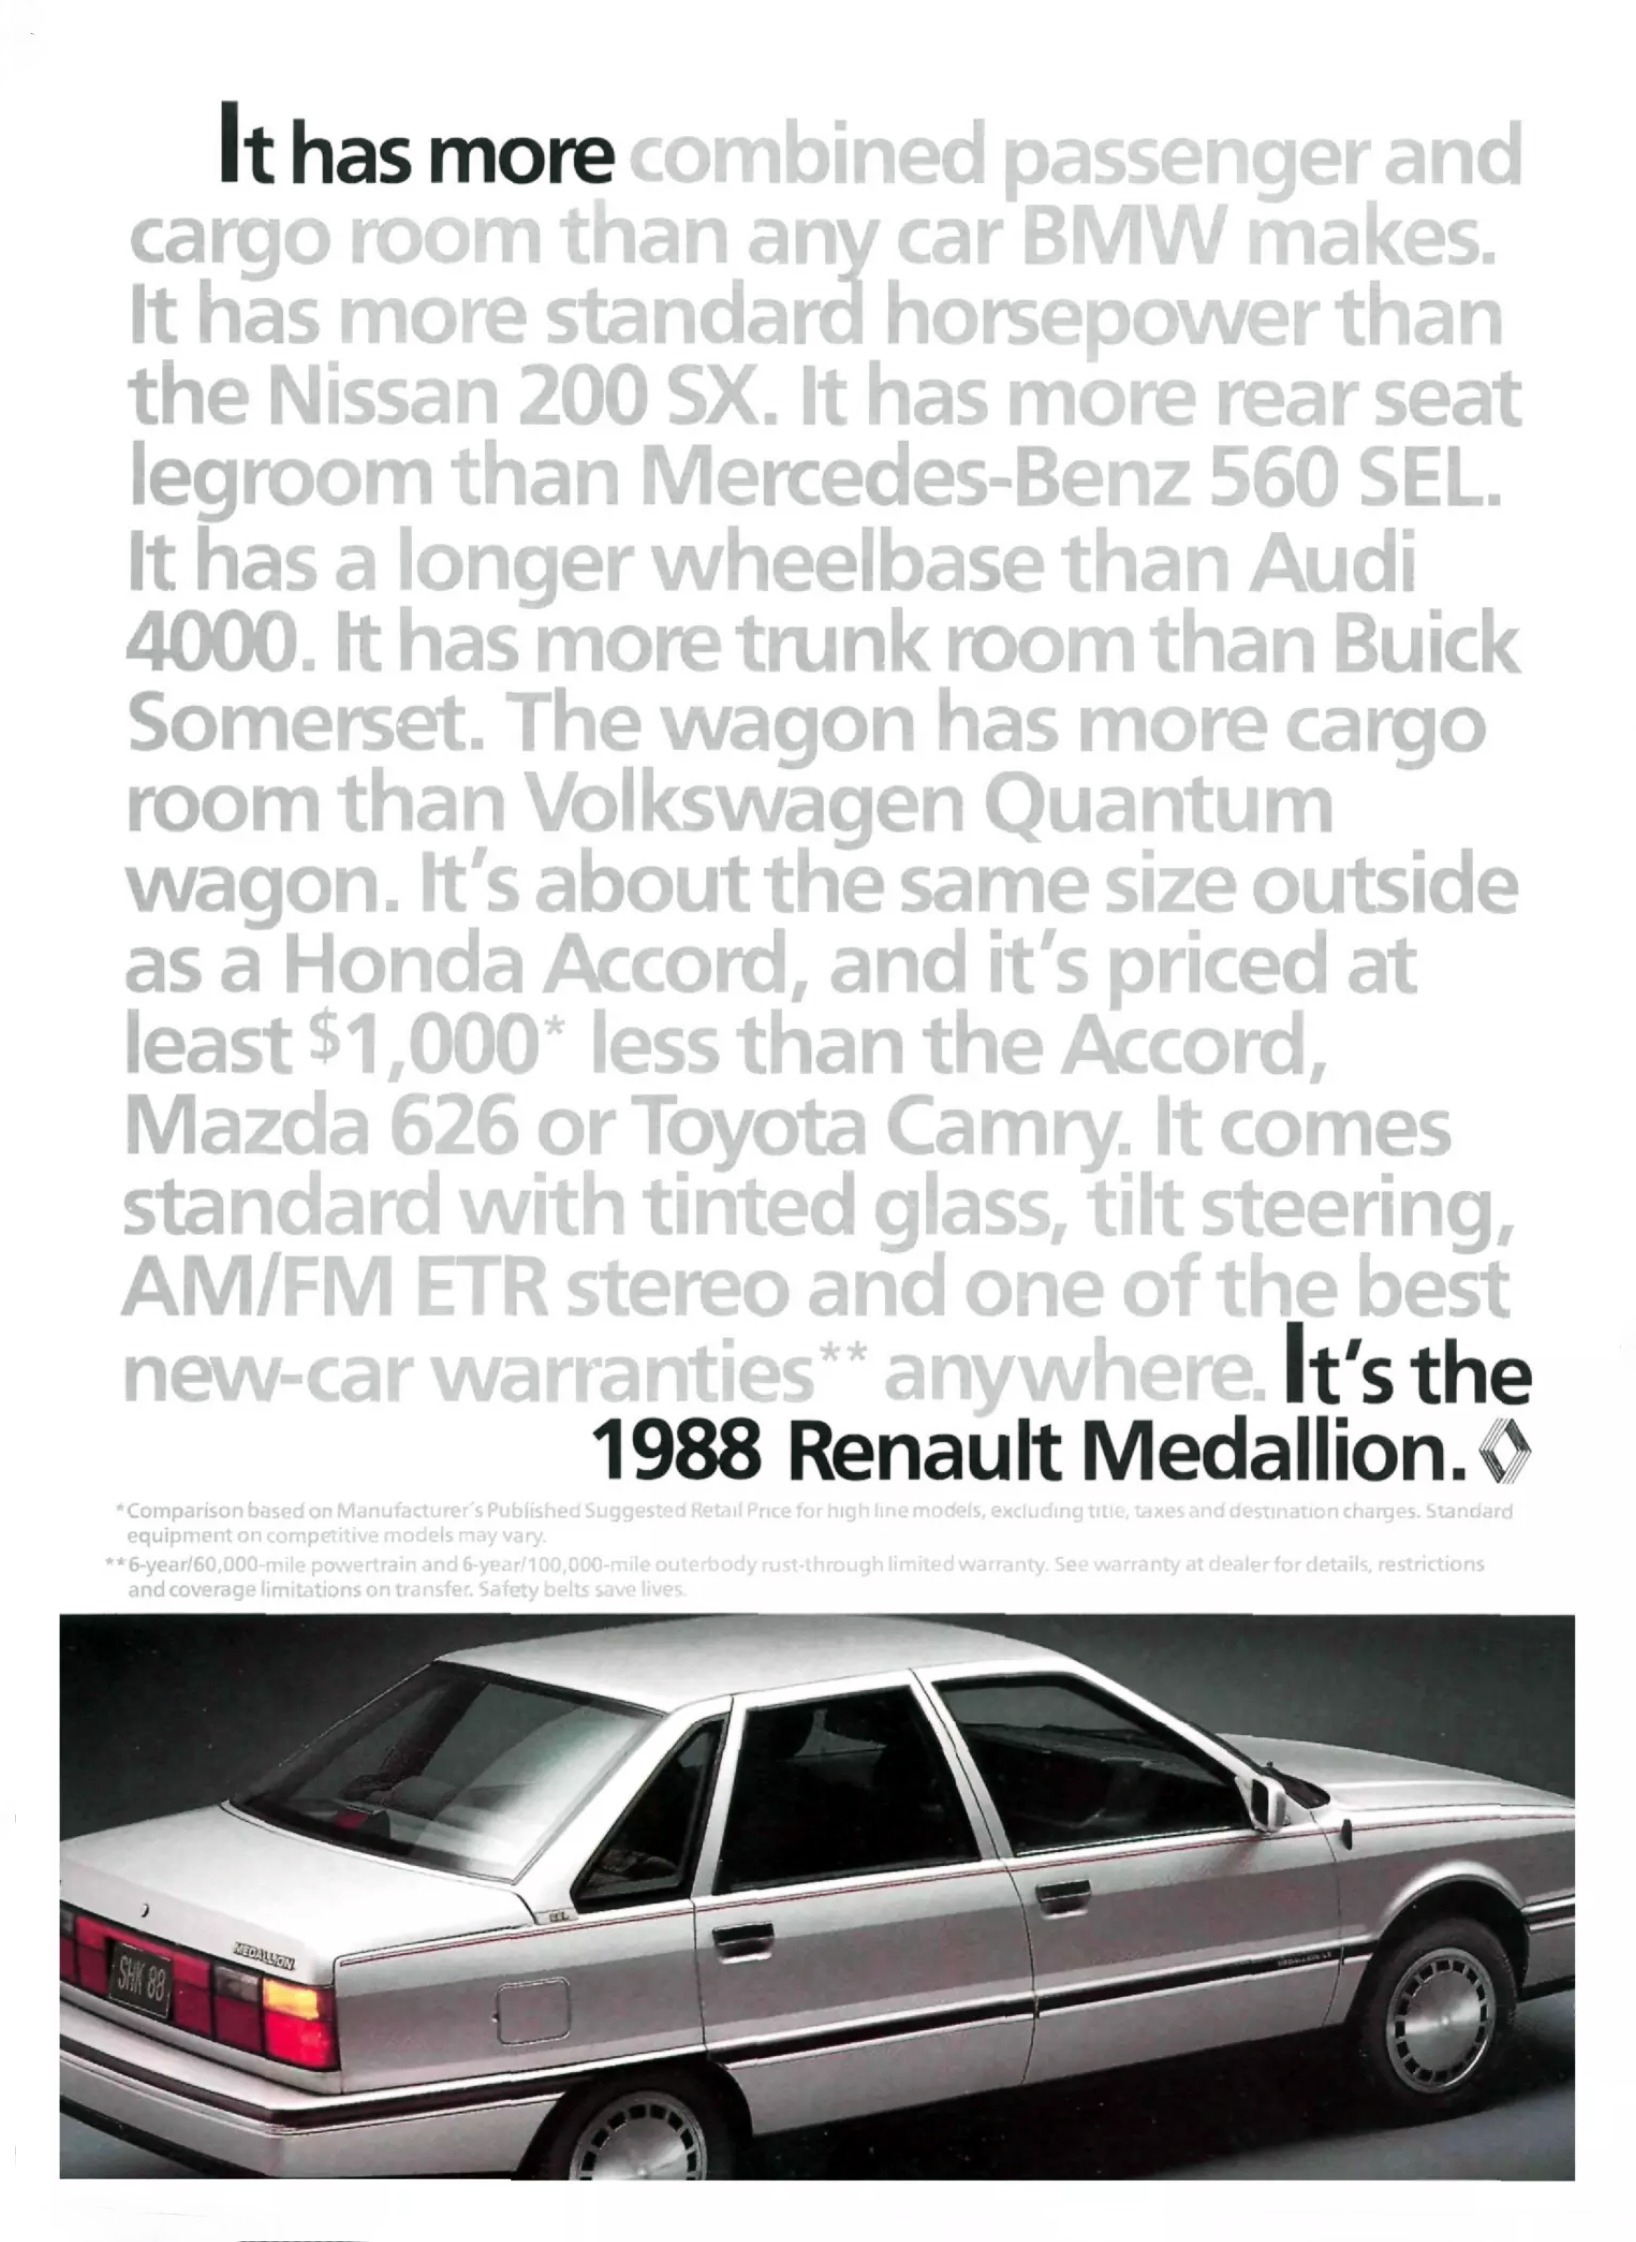 1988 Renault Medallion Ad